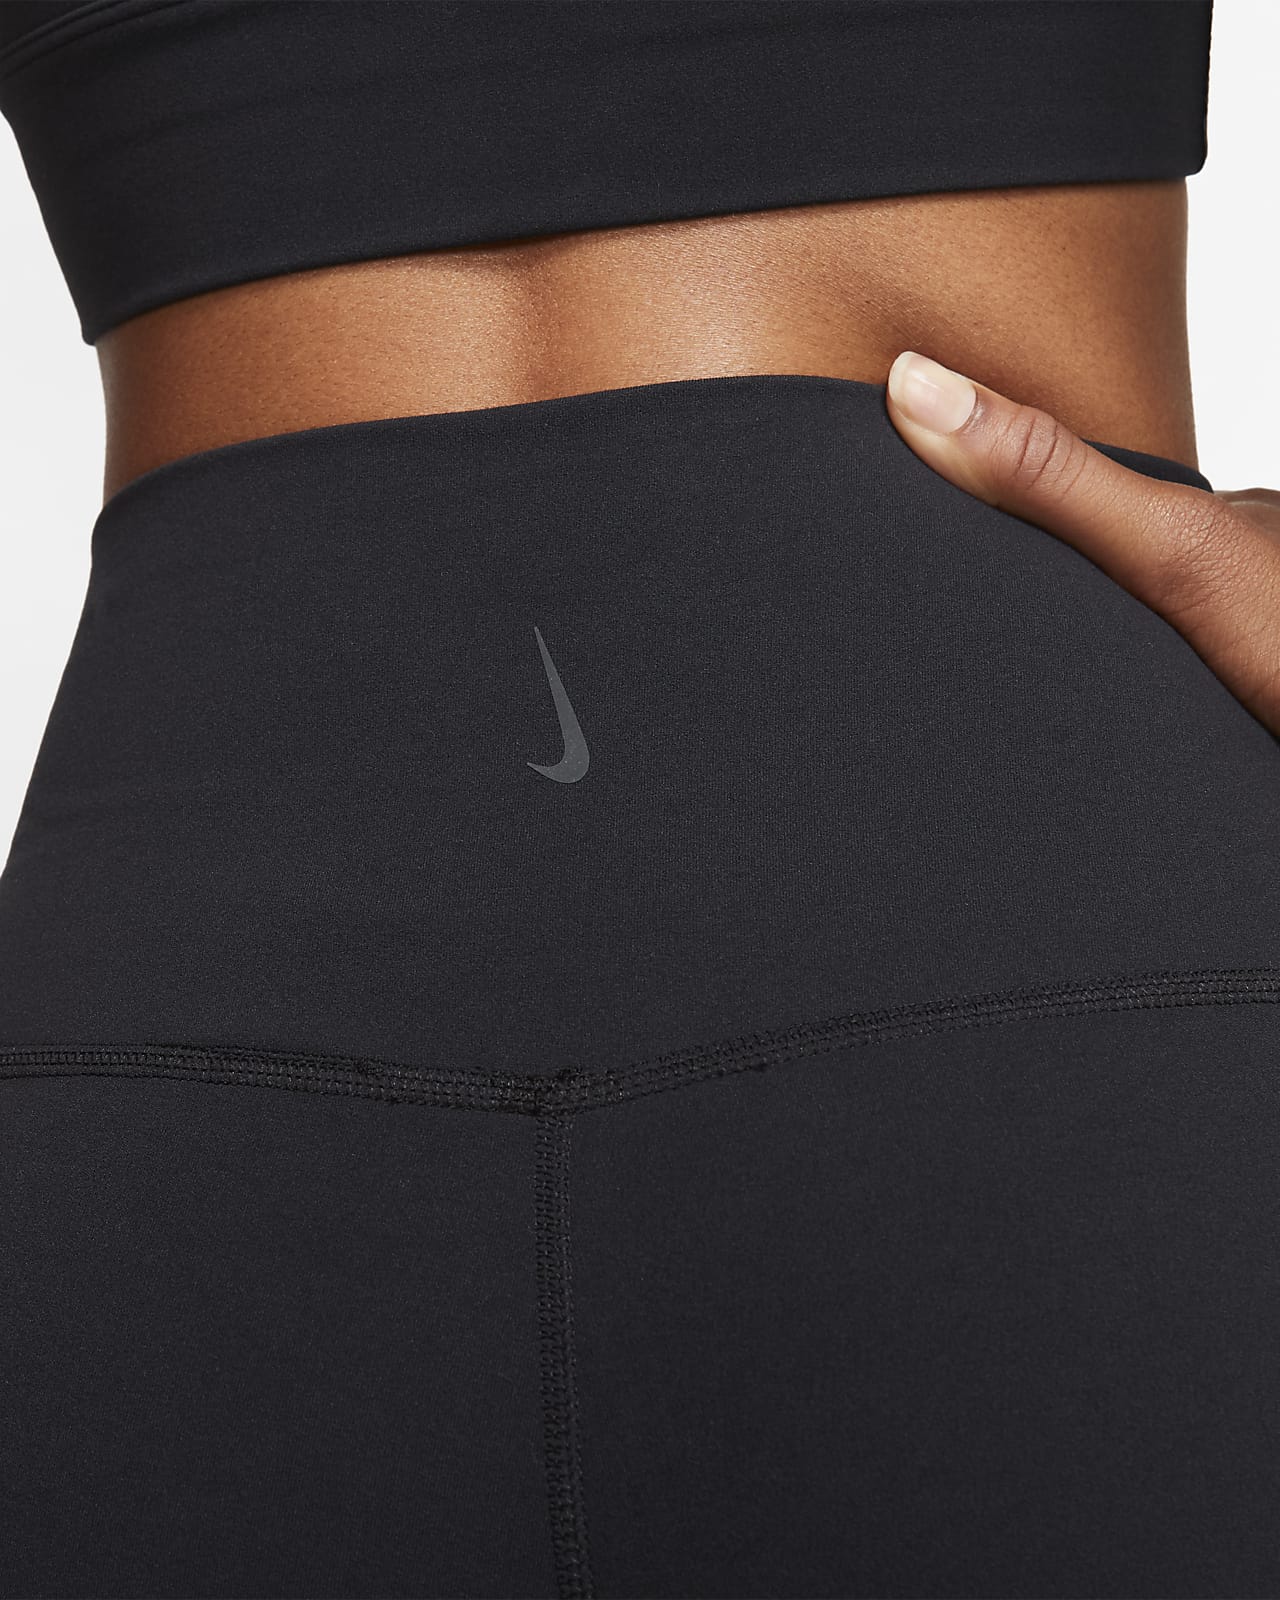 Nike Yoga Dri-FIT Luxe Women's High-Waisted 7/8 Infinalon Leggings